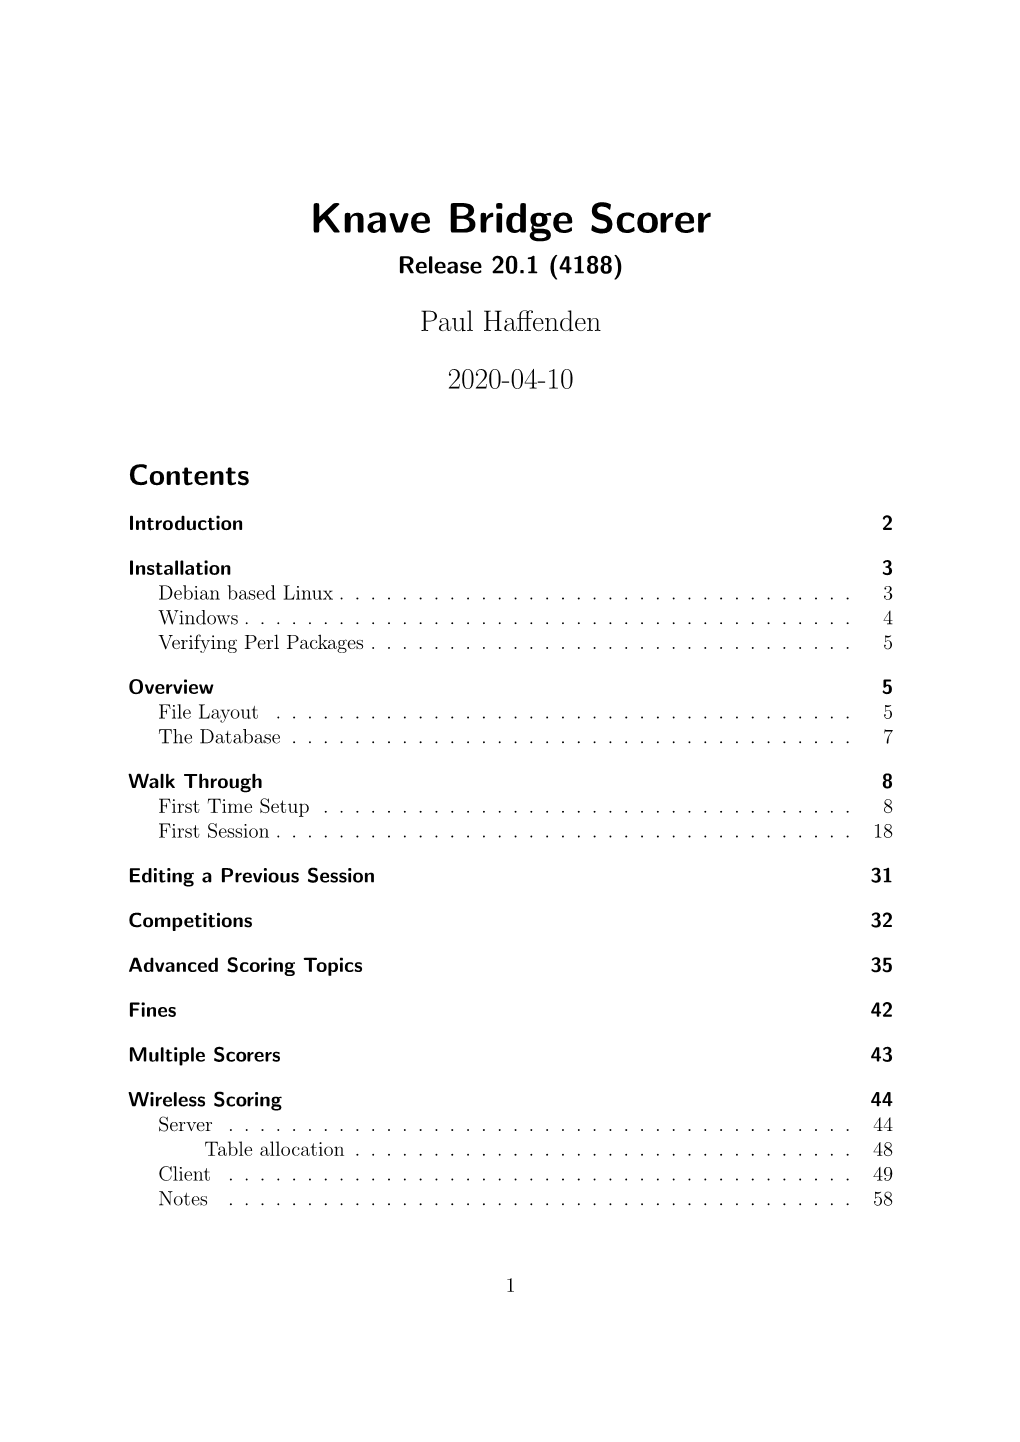 Knave Bridge Scorer Release 20.1 (4188) Paul Haﬀenden 2020-04-10